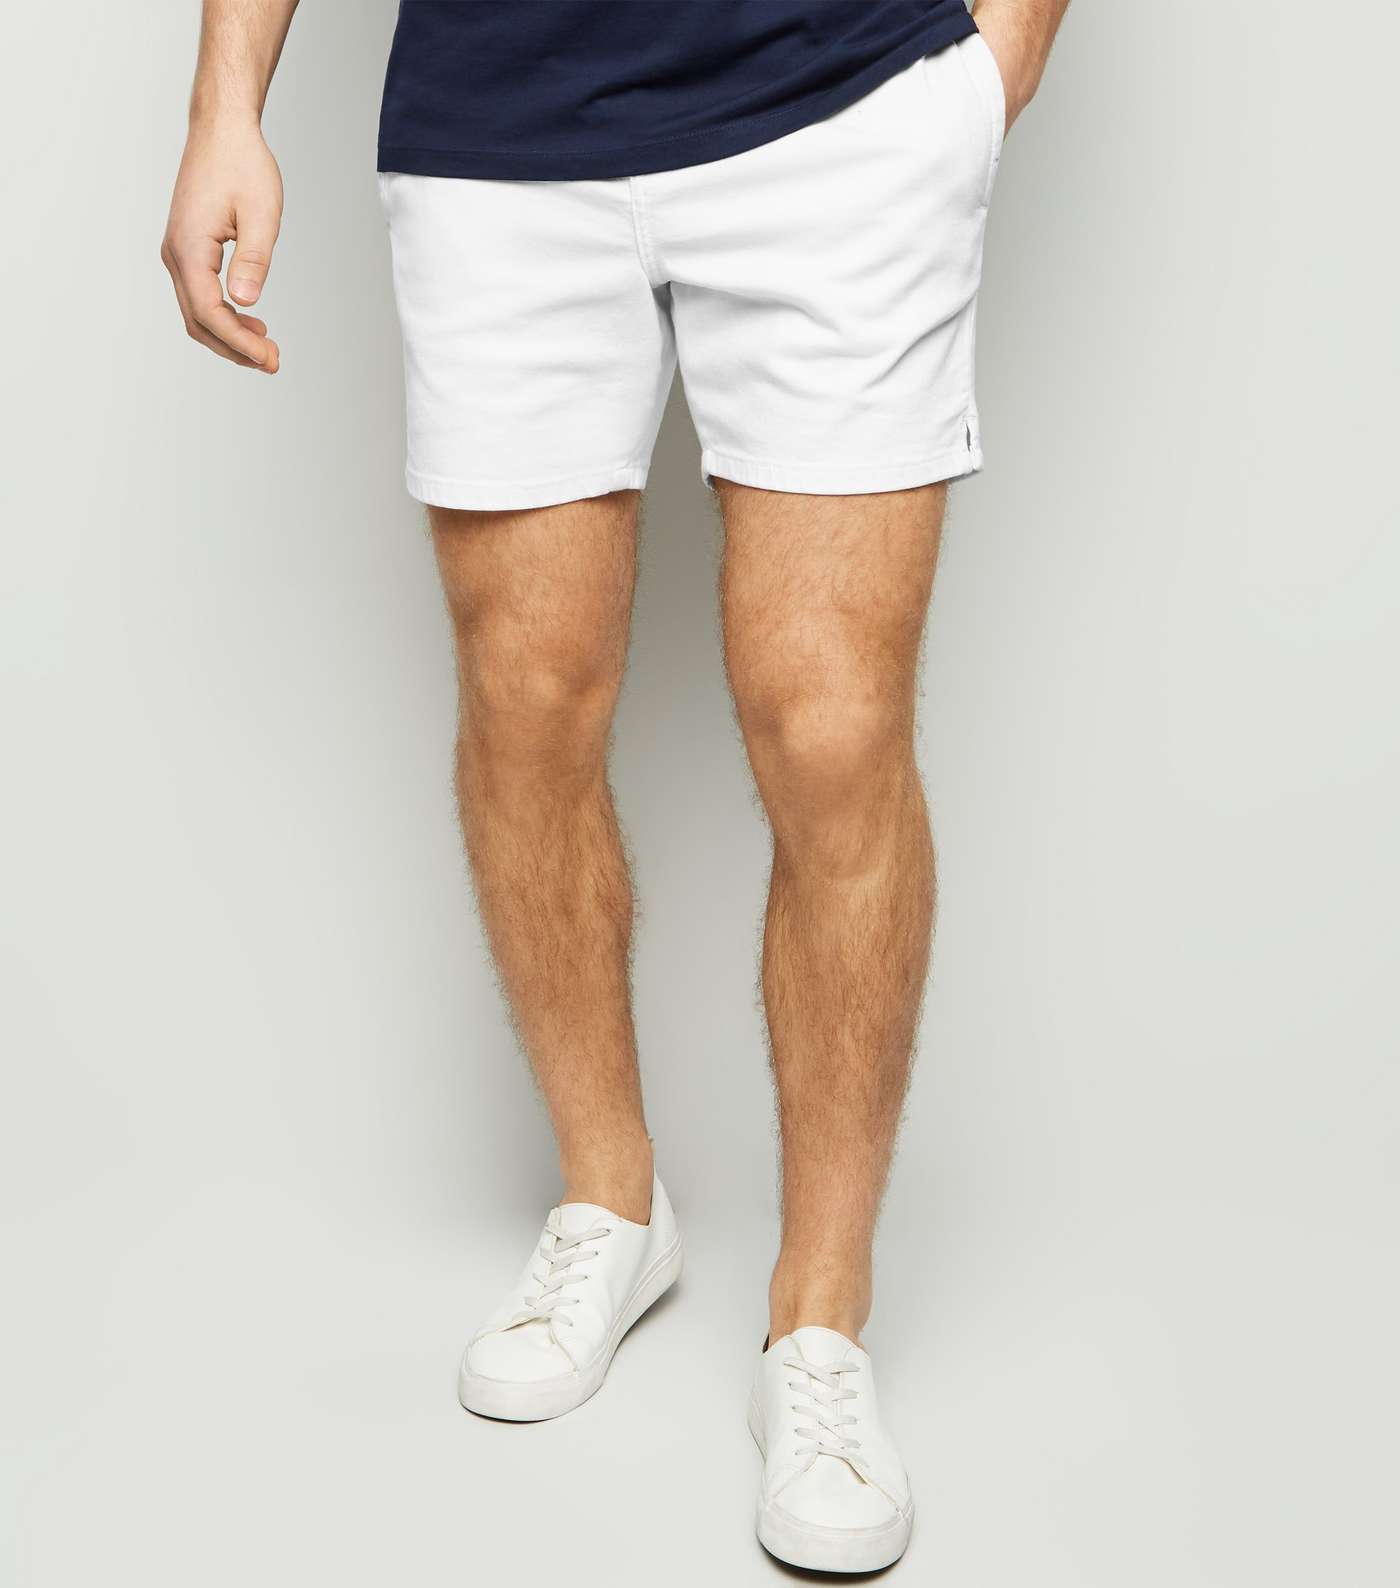 White Drawstring Shorts